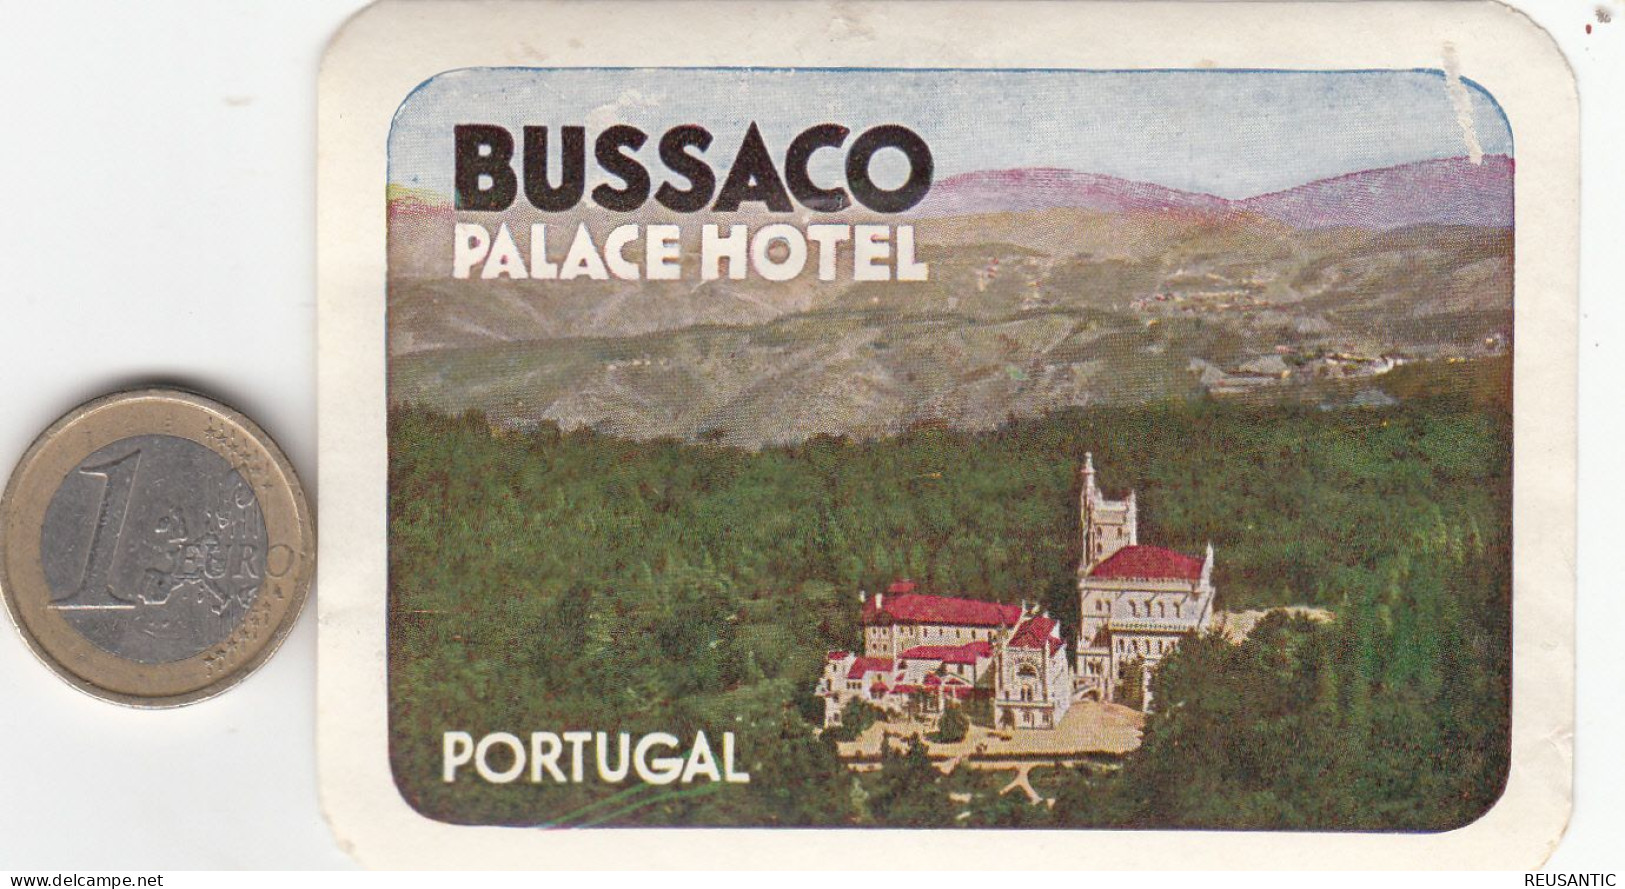 ETIQUETA - STICKER - LUGGAGE LABEL  PORTUGAL HOTEL PALACE EN BUSSACO - Hotel Labels